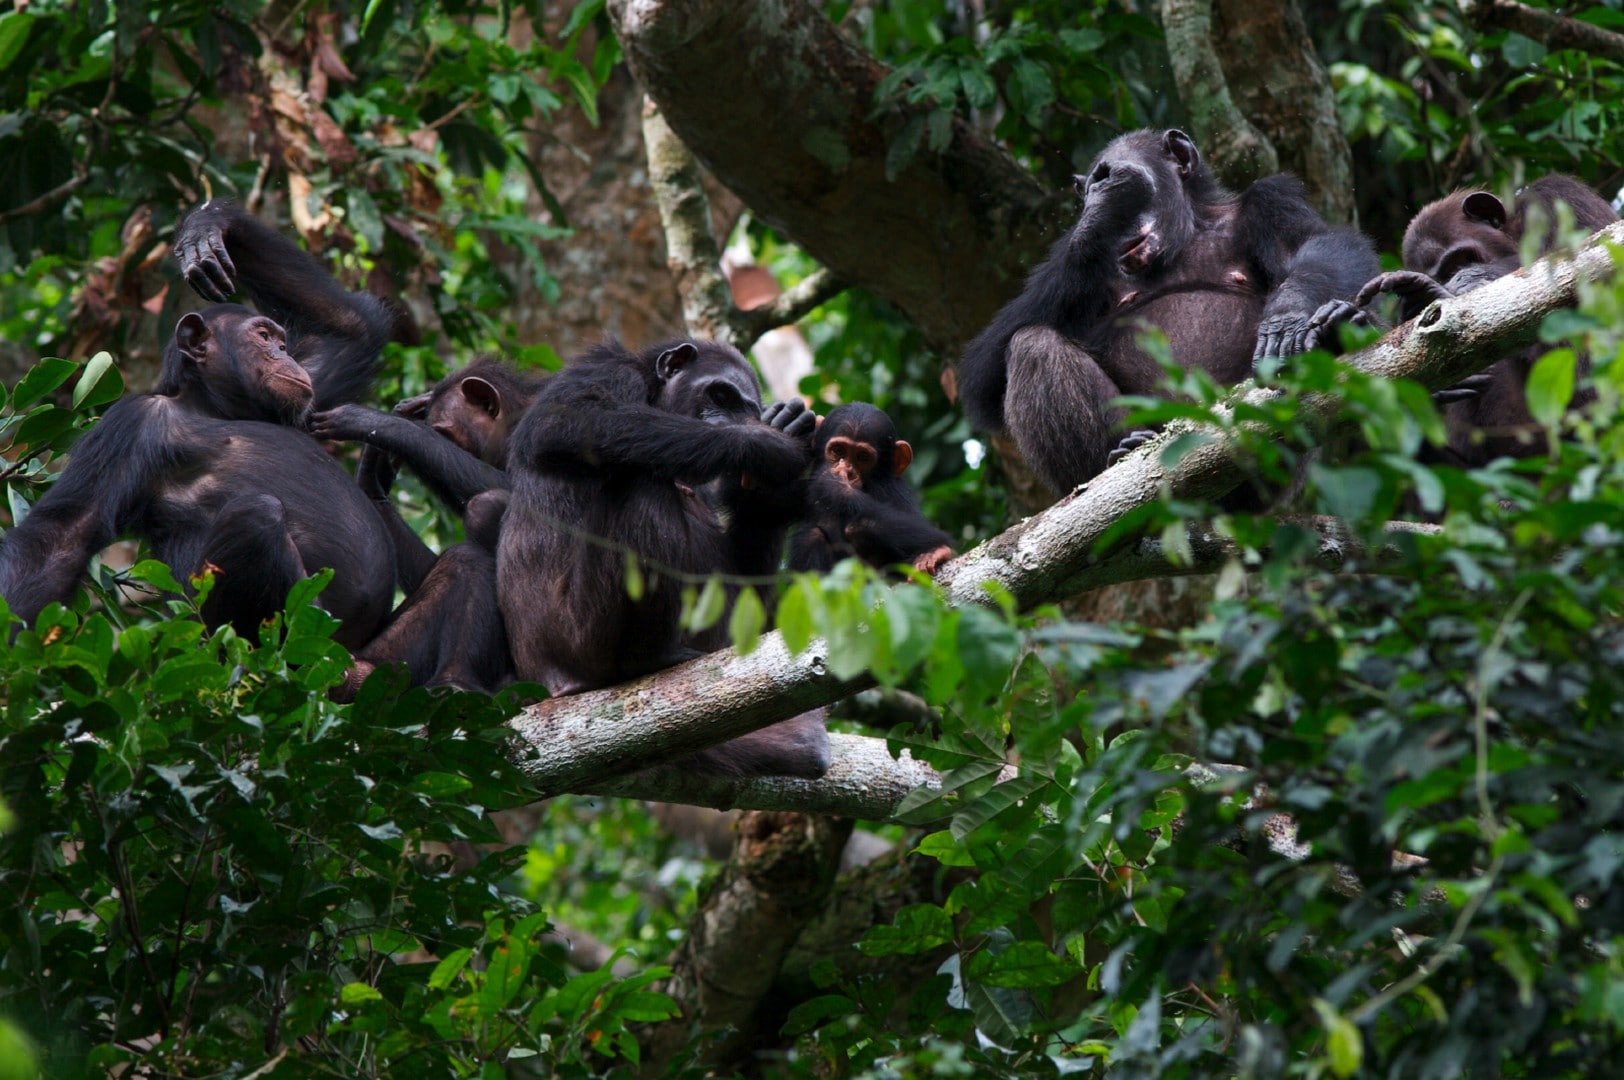 Group of gorillas